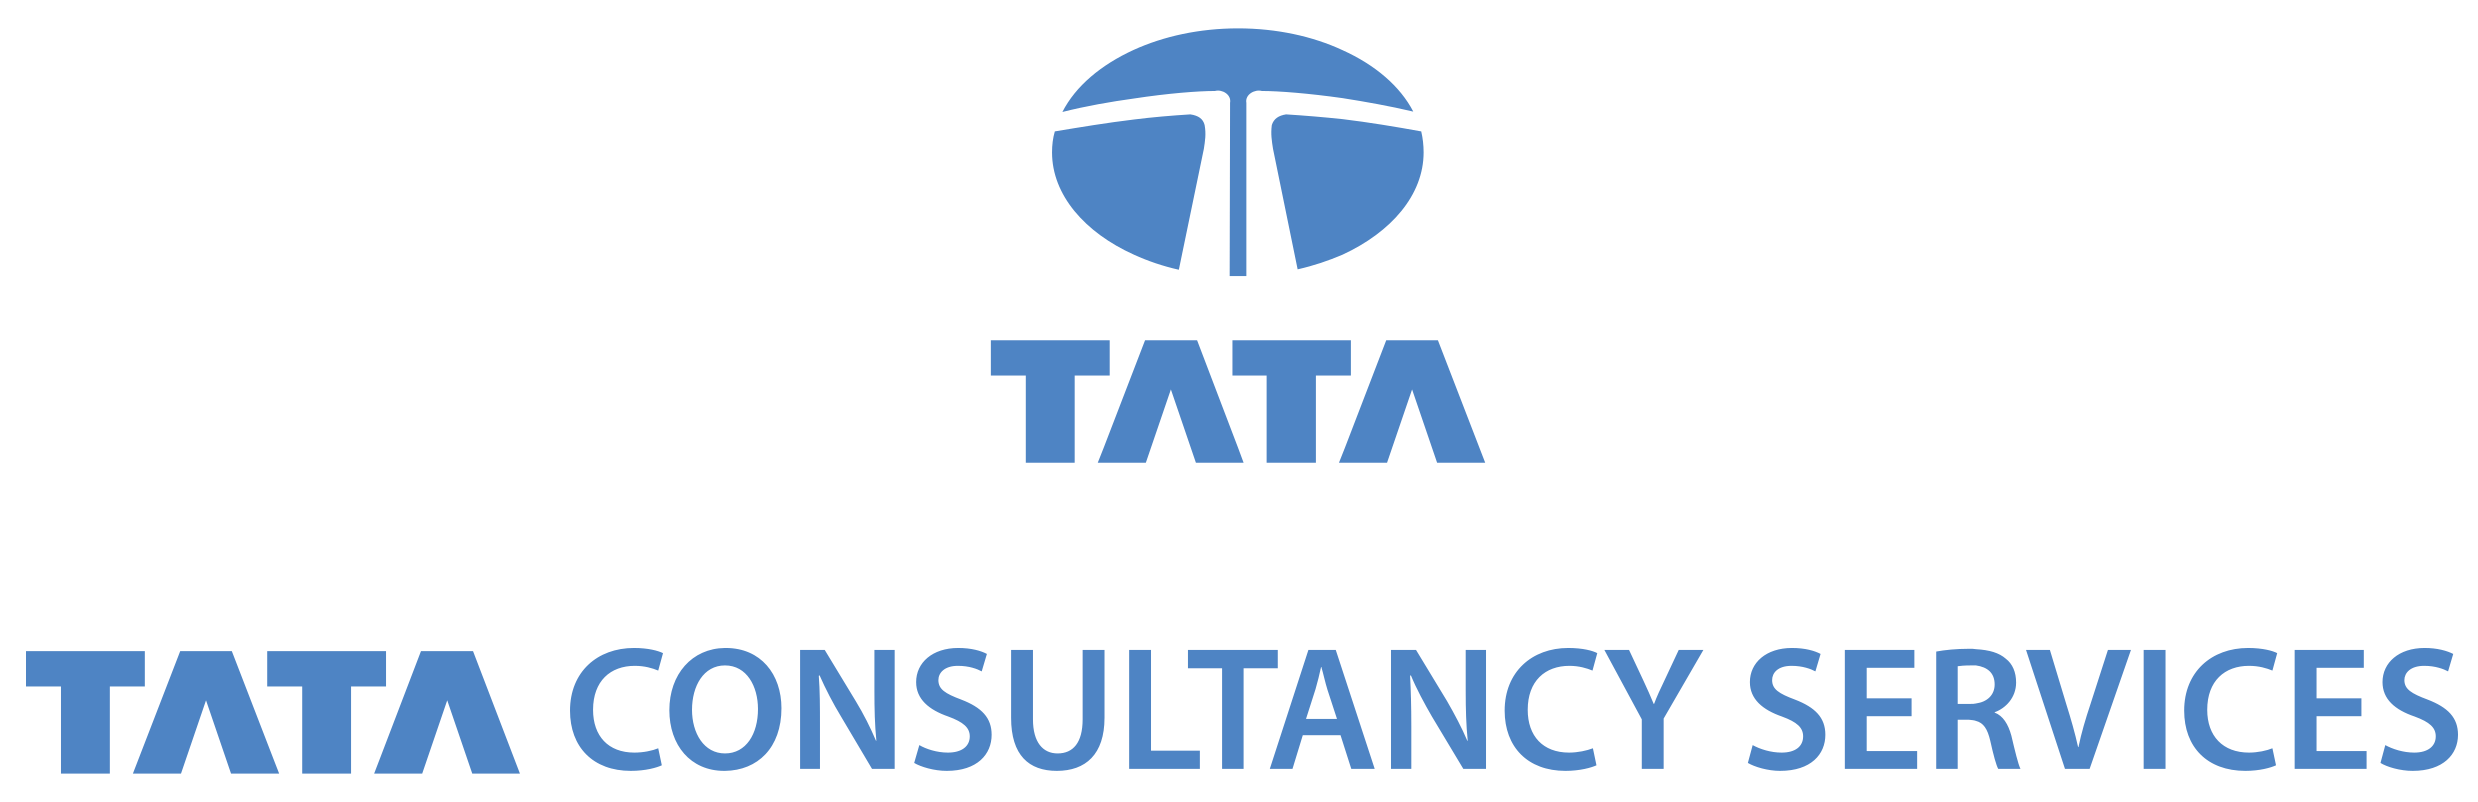 TATA_Consultancy_Services_Logo_blue.svg